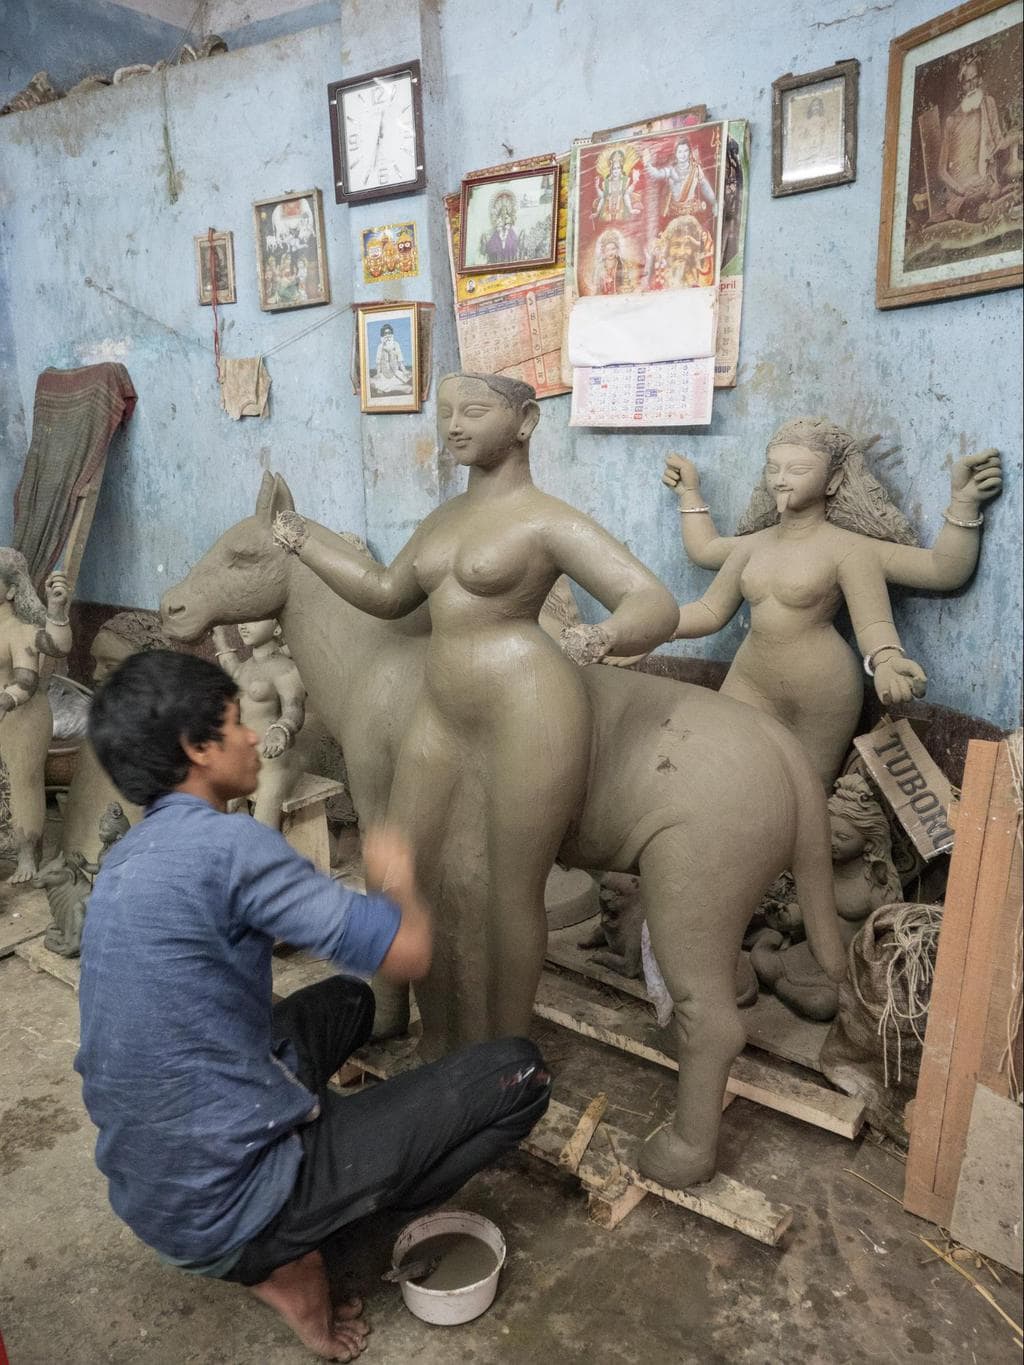 An artist making Hindu God statues